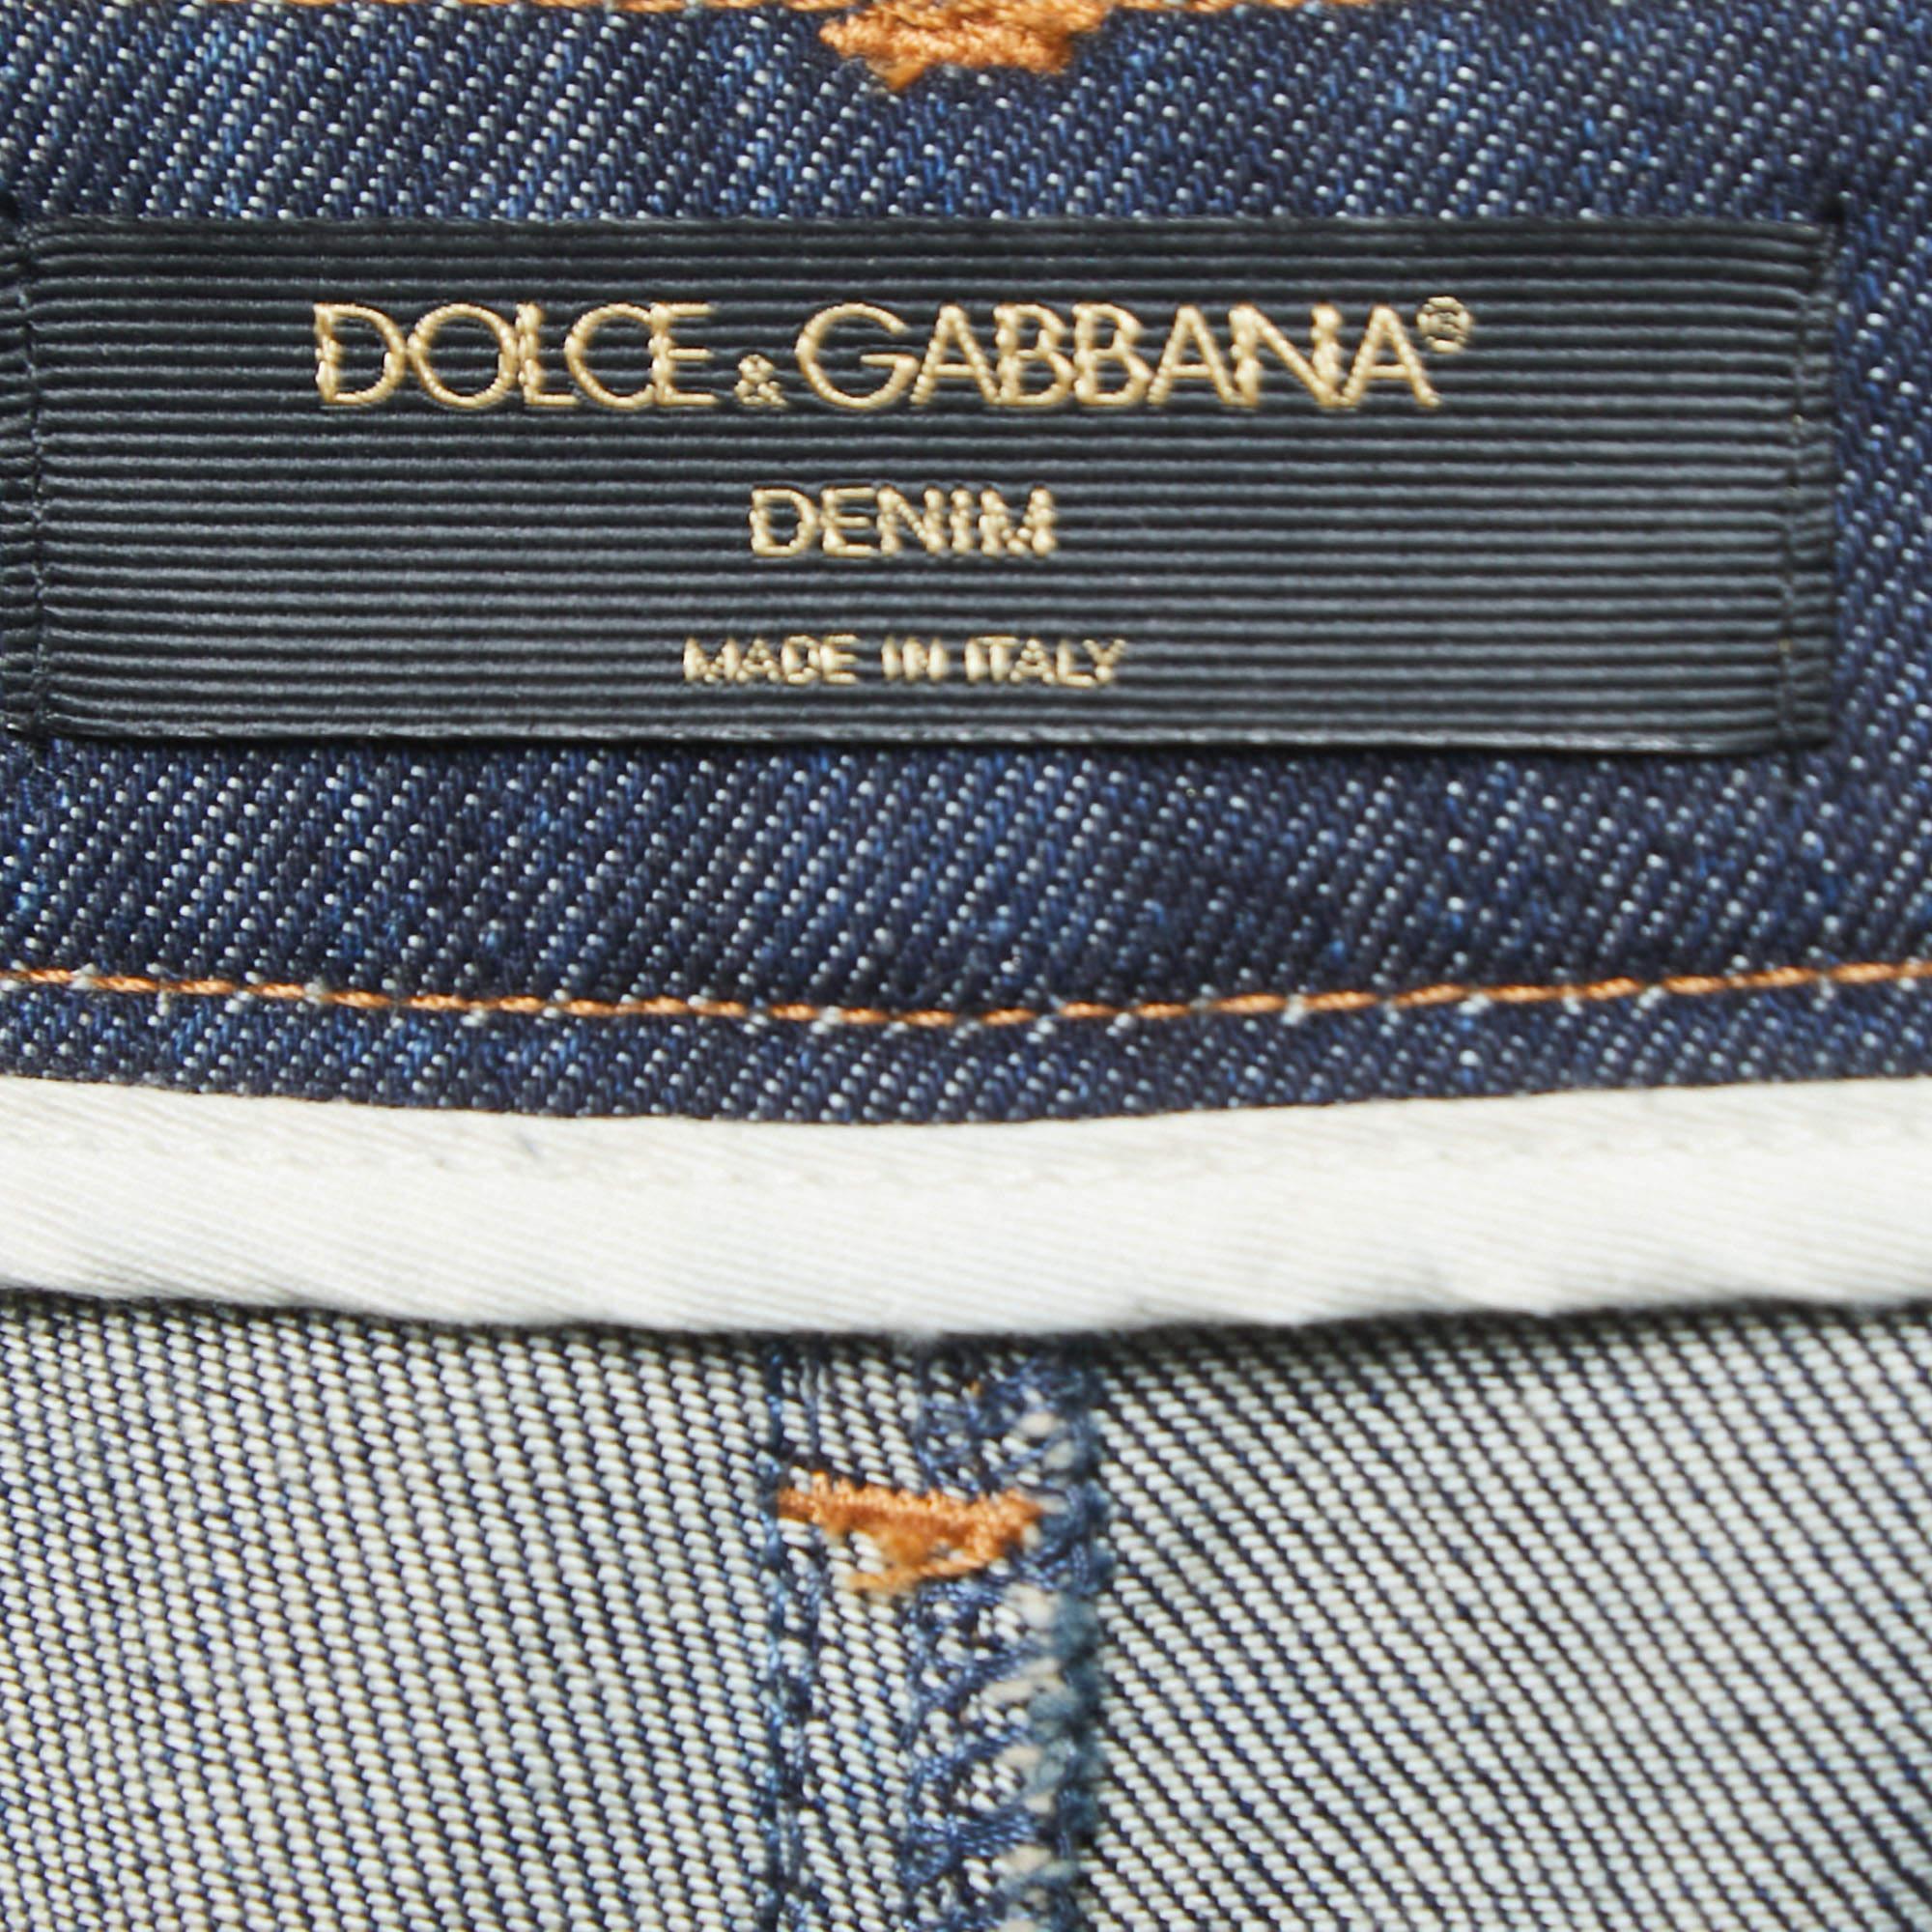 Dolce & Gabbana Blue Denim Flared Embroidered Jeans S Waist 27